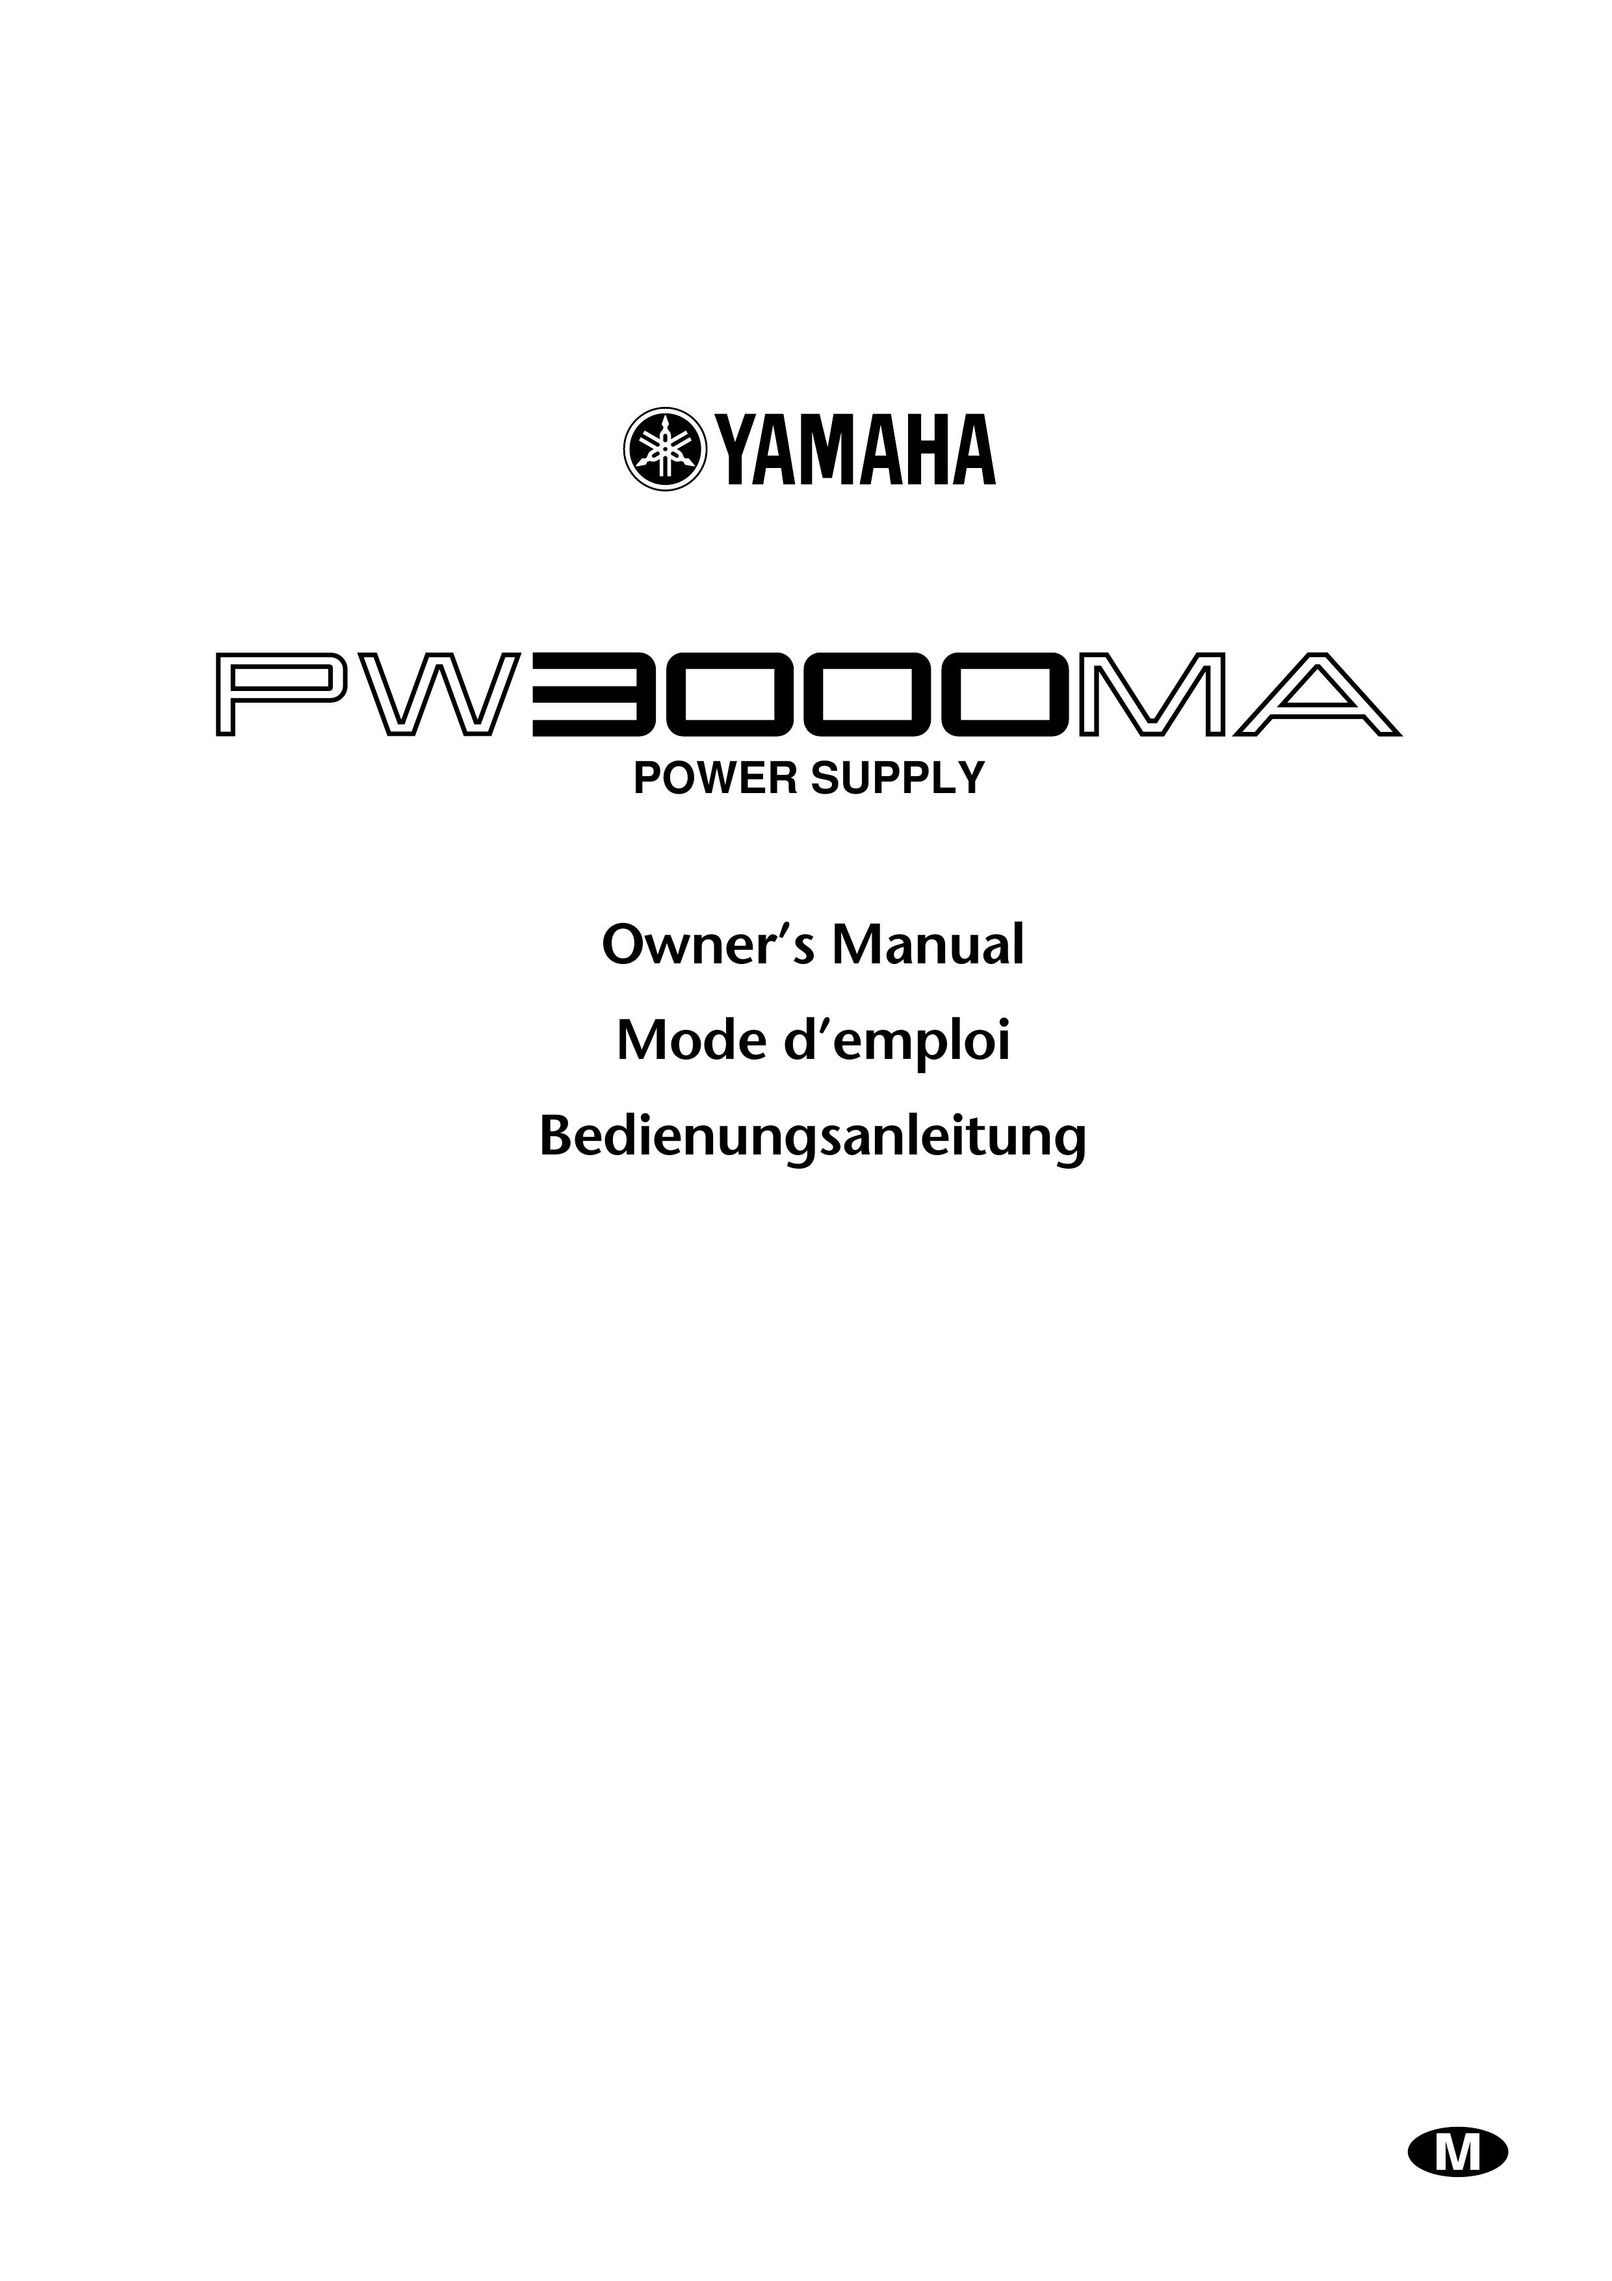 Yamaha PW3000MA Power Supply User Manual